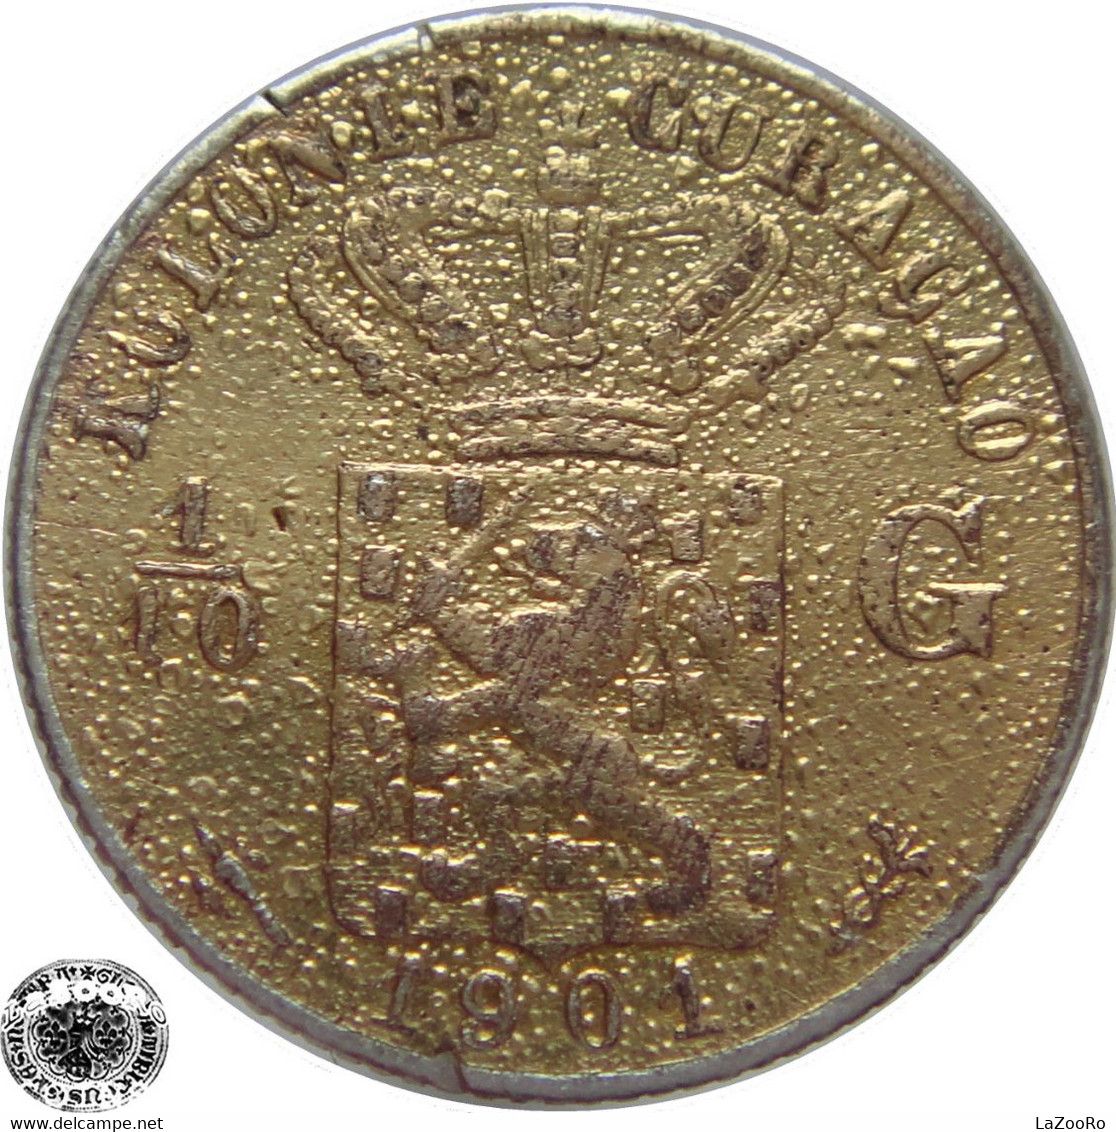 LaZooRo: Curaçao 1/10 Gulden 1901 VF Gold Plated - Silver - Curaçao